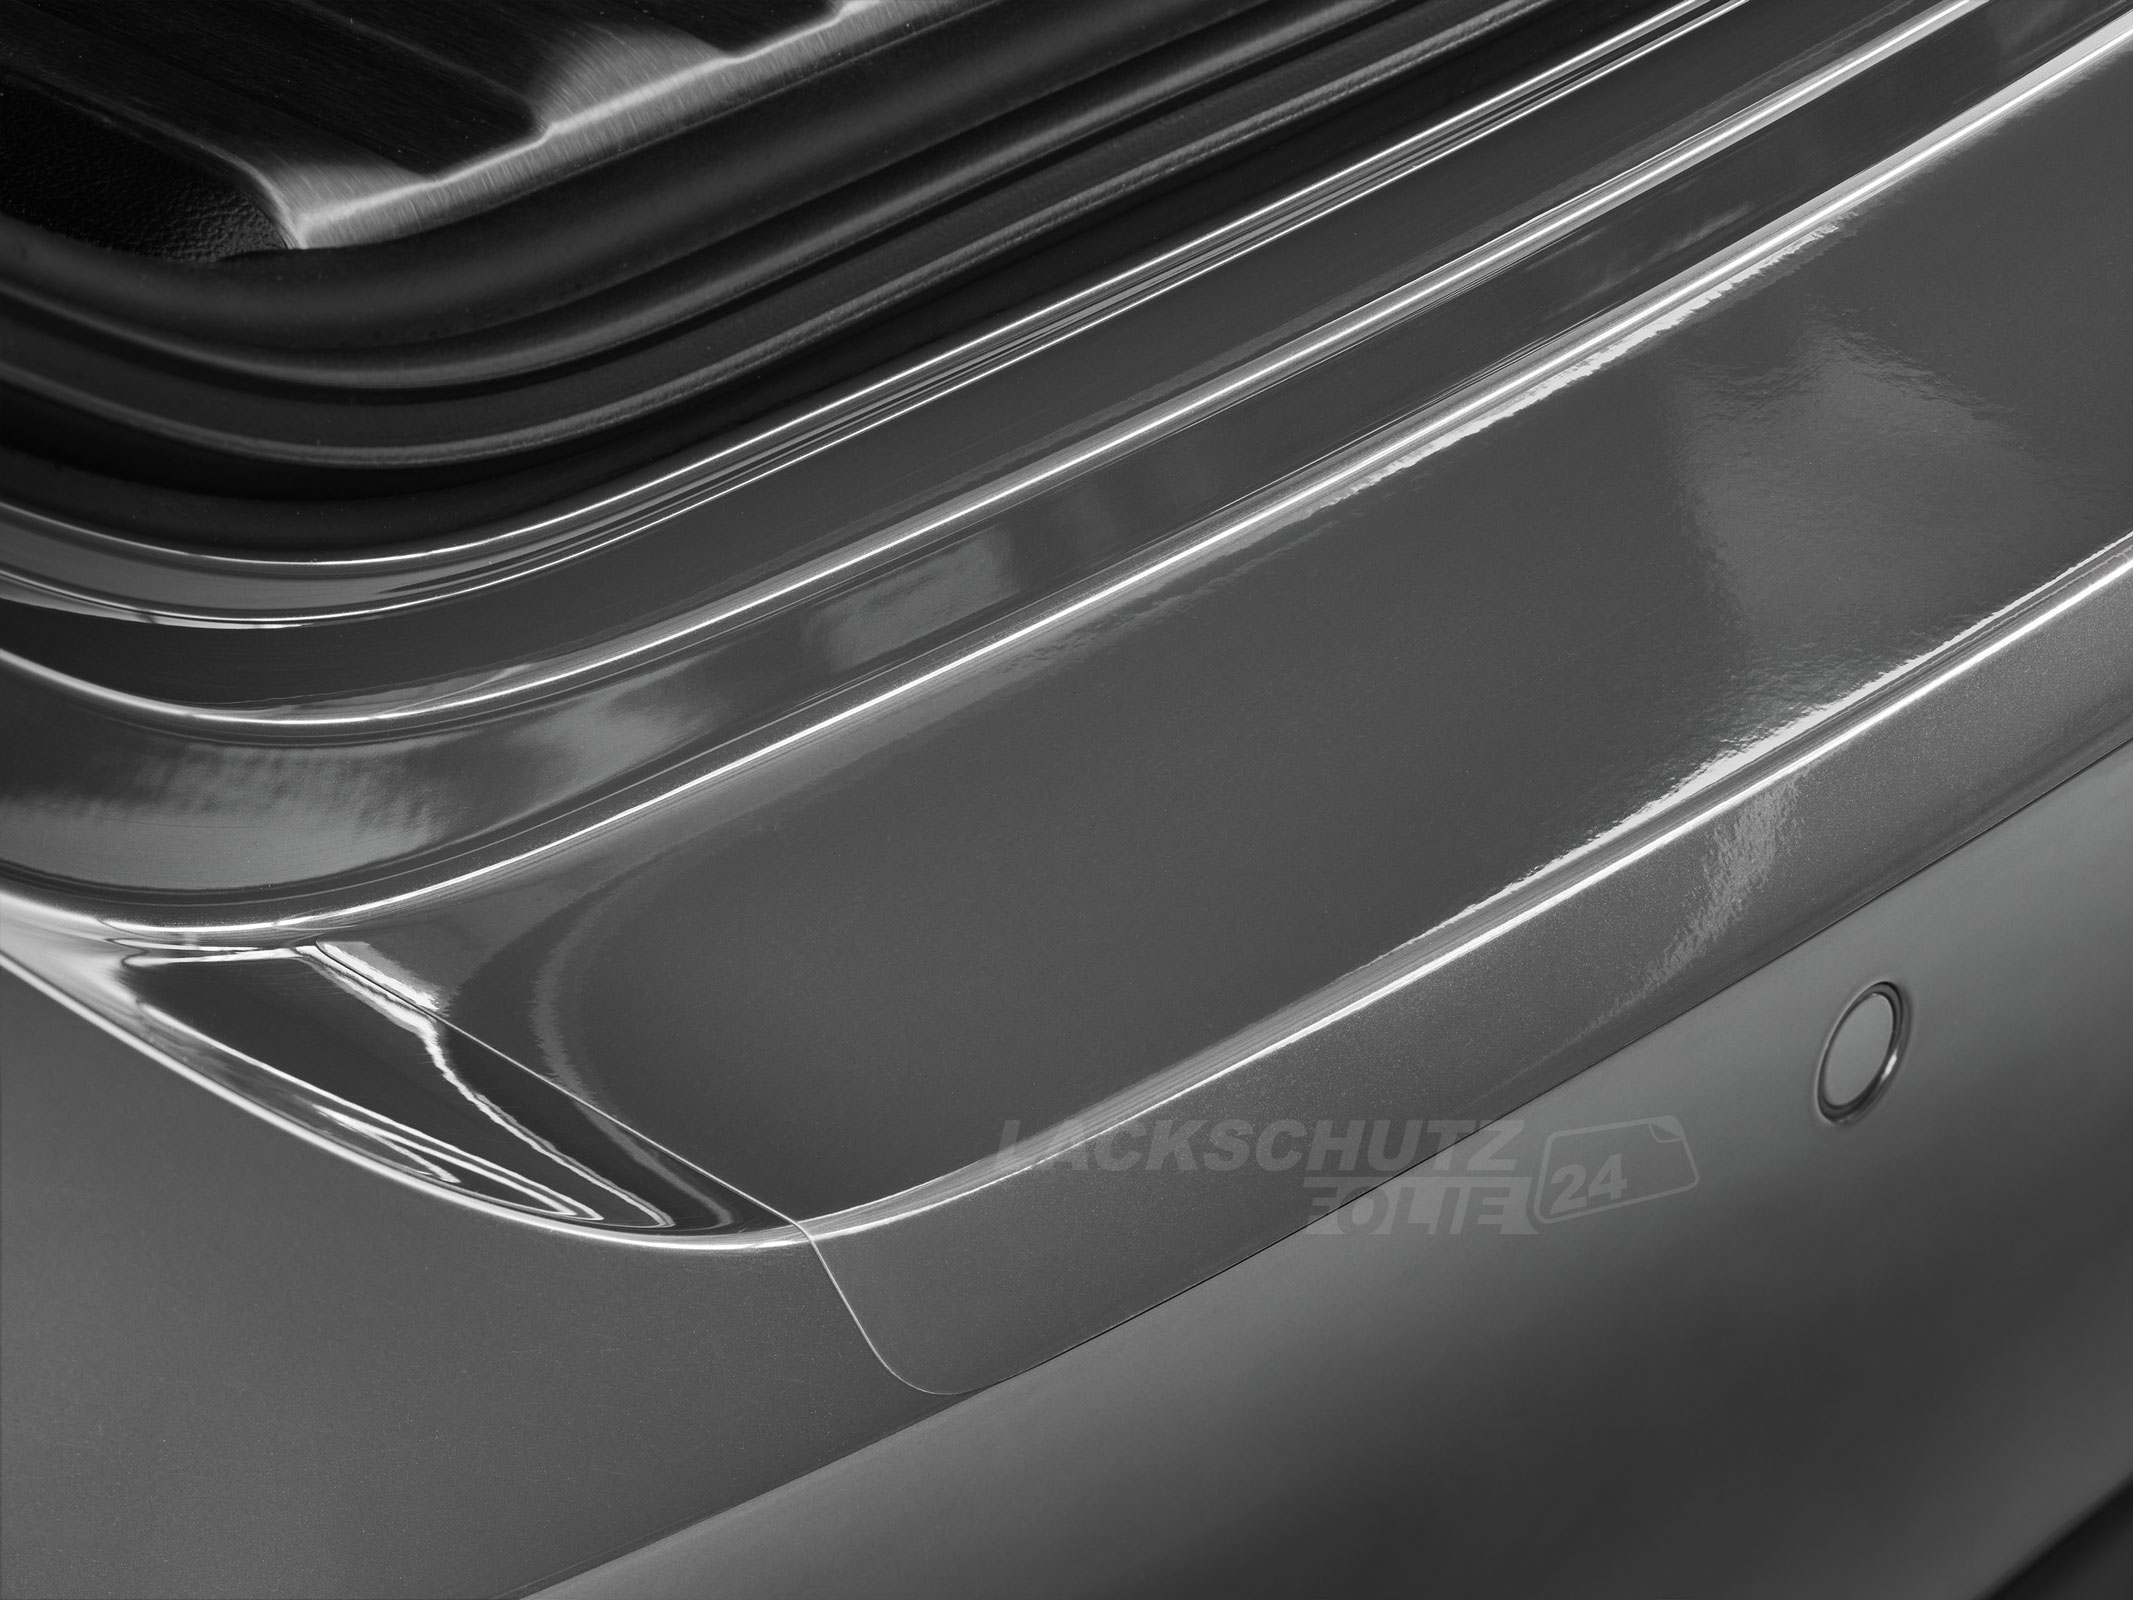 Ladekantenschutzfolie - Transparent Glatt Hochglänzend 240 µm stark für Skoda Fabia (III) Typ NJ, ab 10/2014 + Facelift